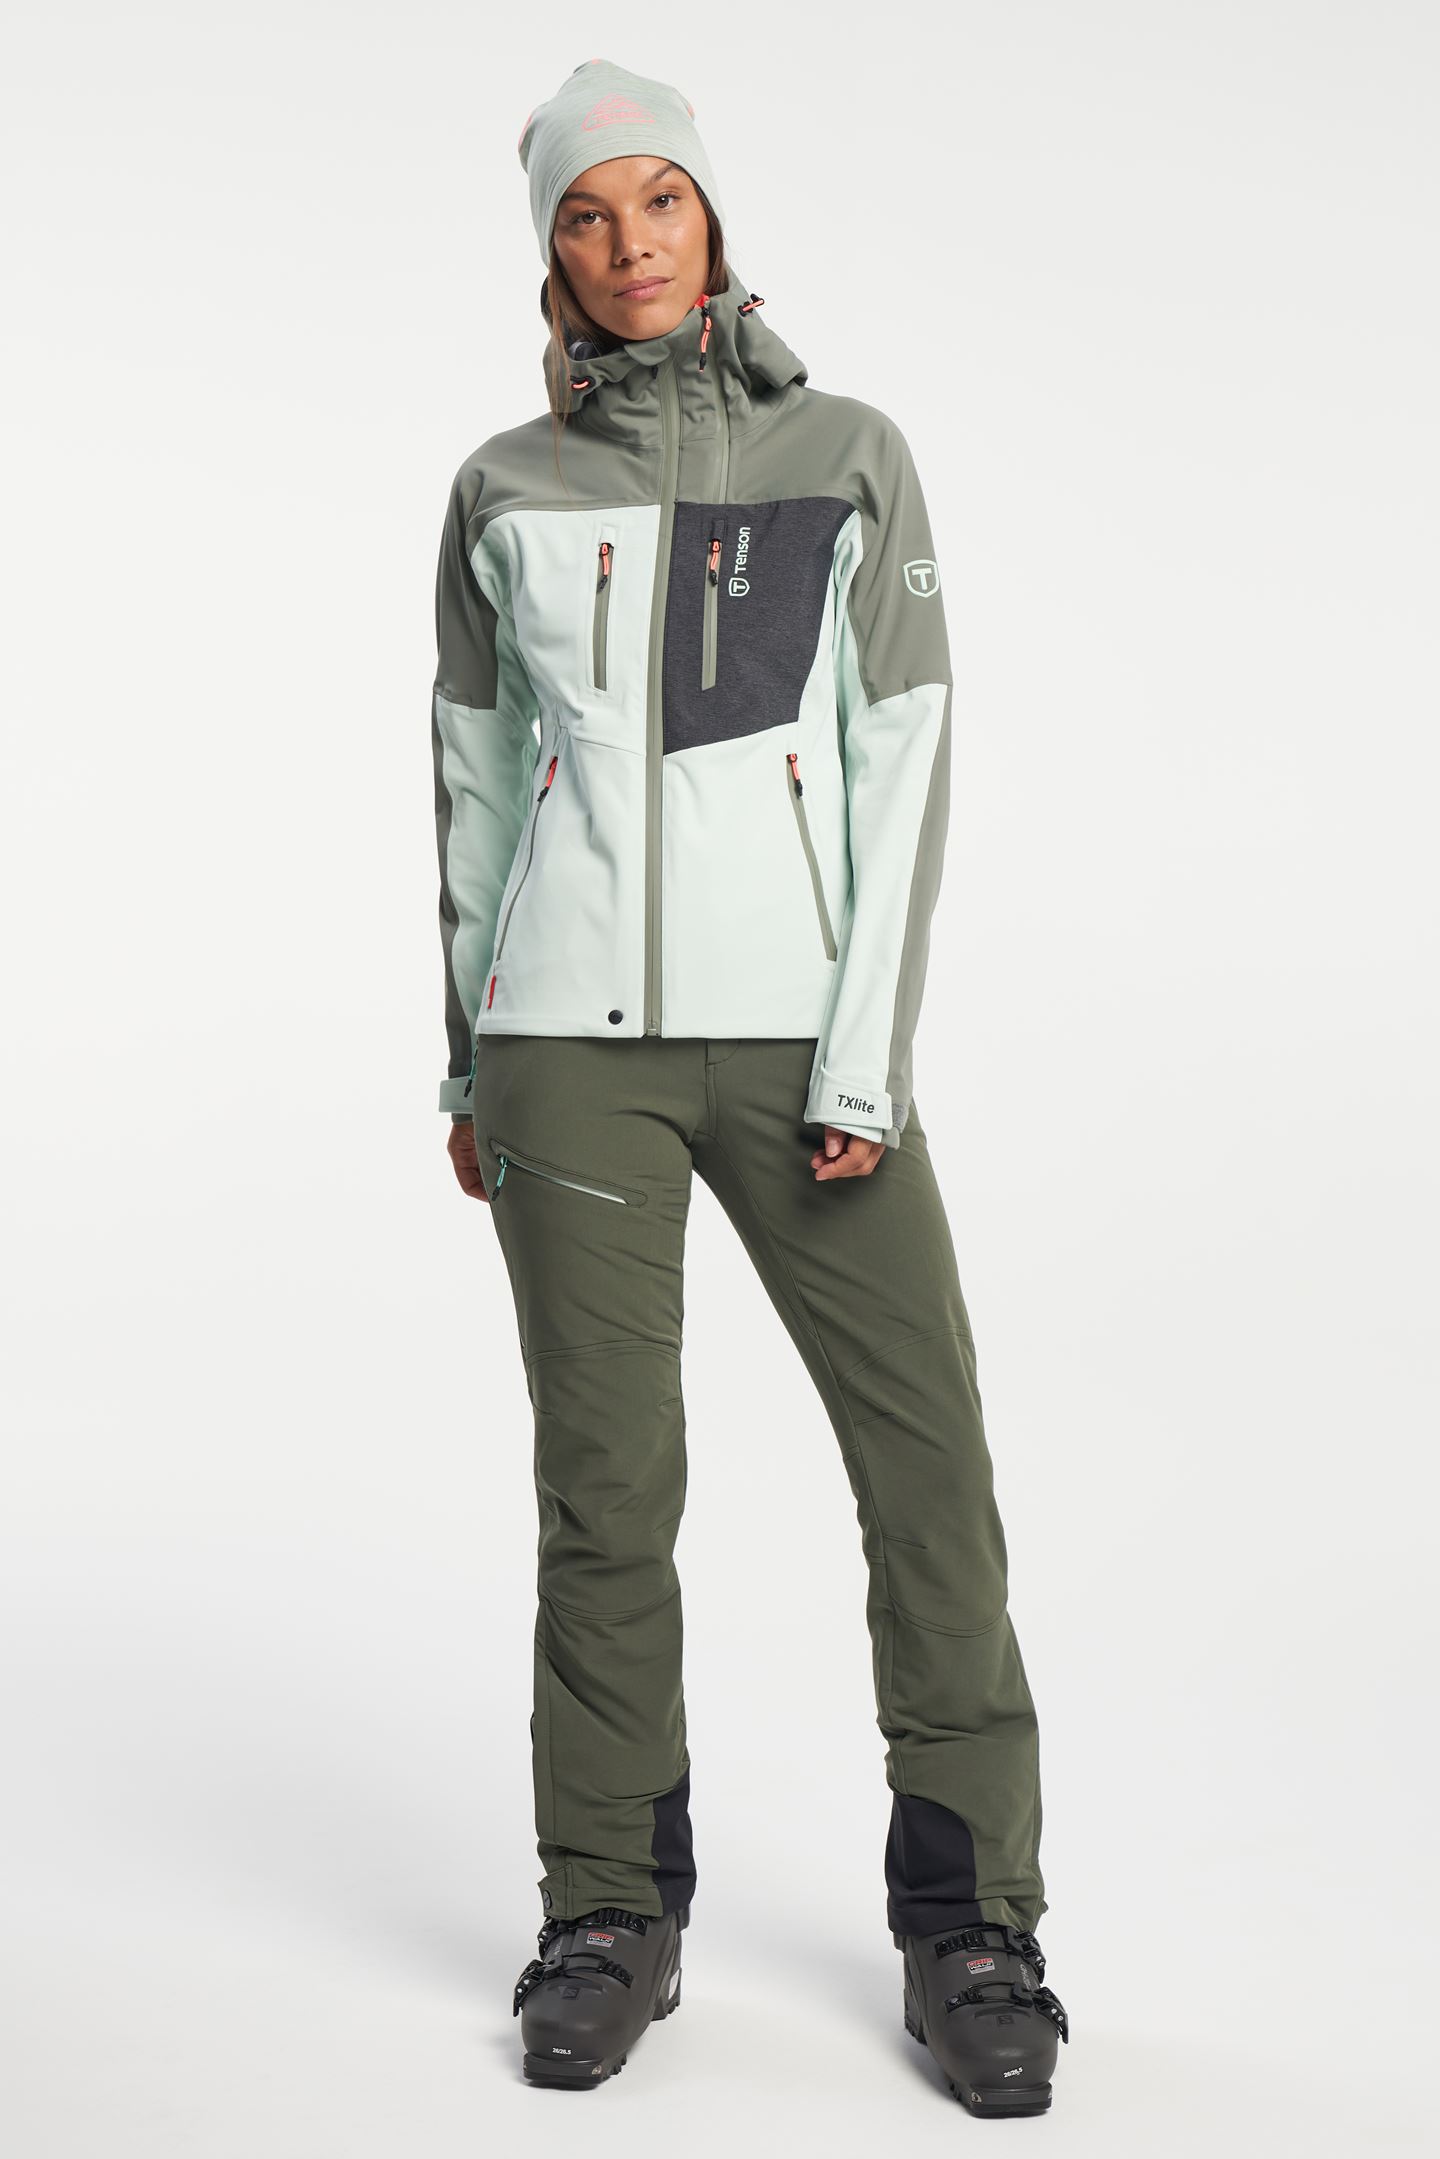 Banyan Kenia Stevig Ski Touring Softshell - Ski Touring Softshell Jacket for Women - Dusty Aqua